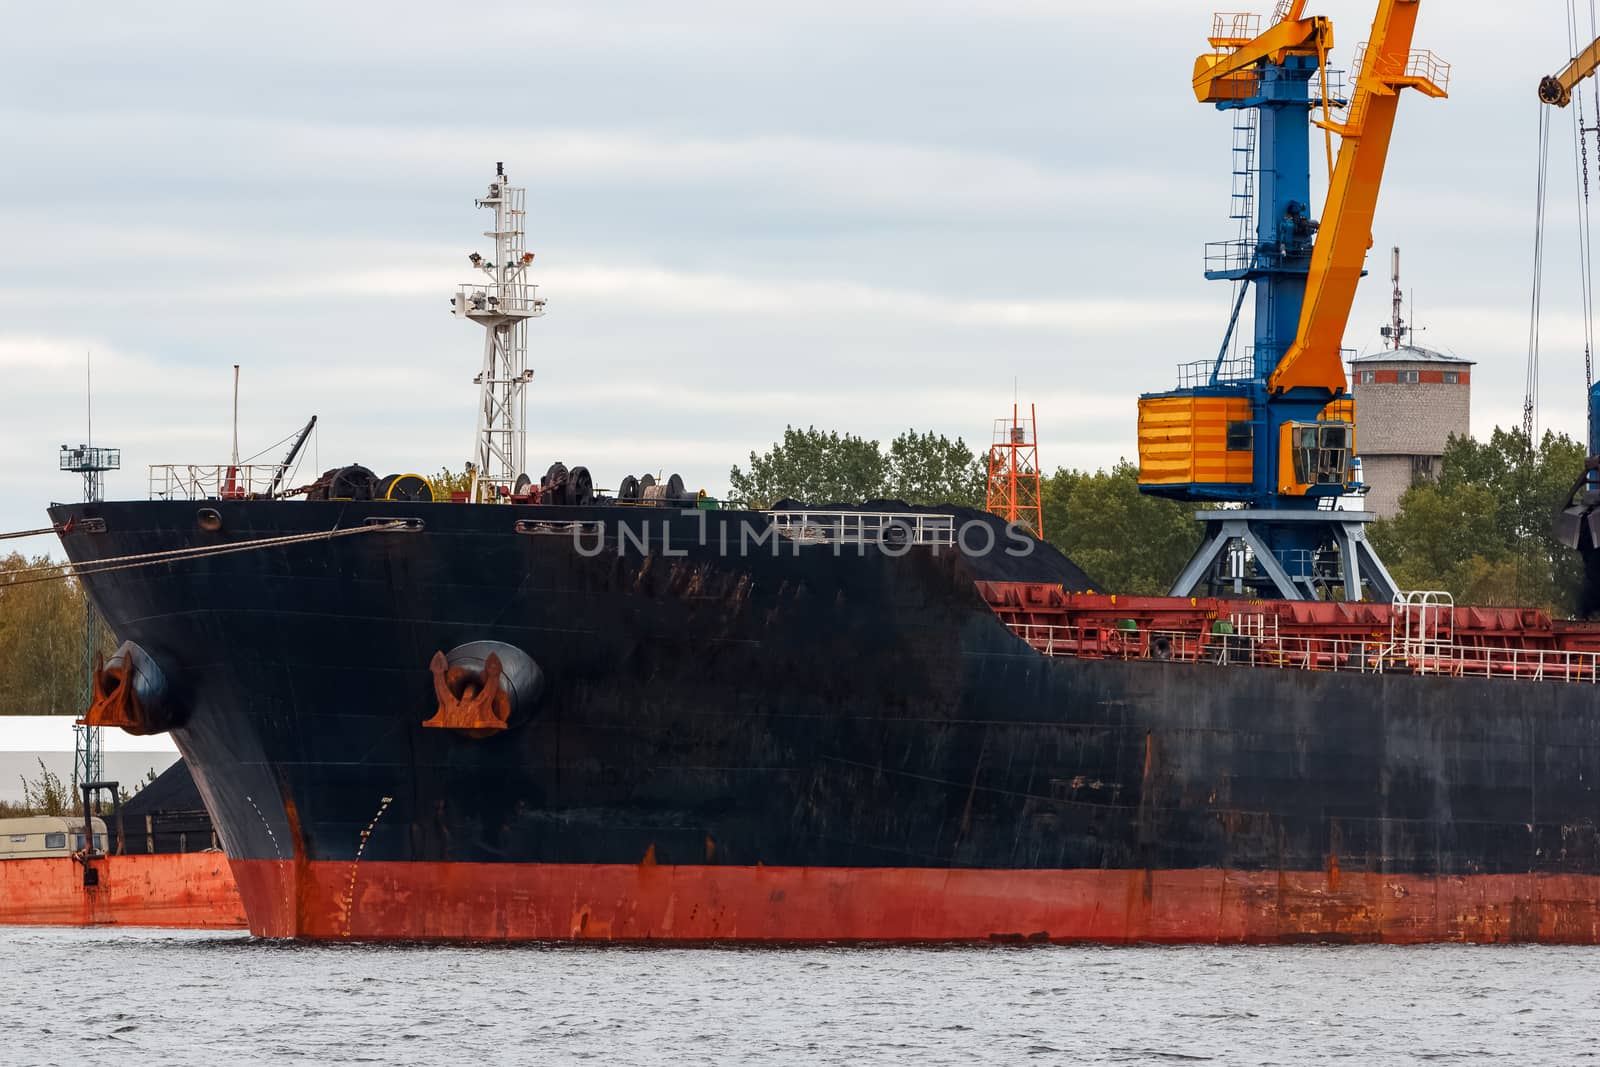 Black cargo ship loading in the port of Riga, Europe